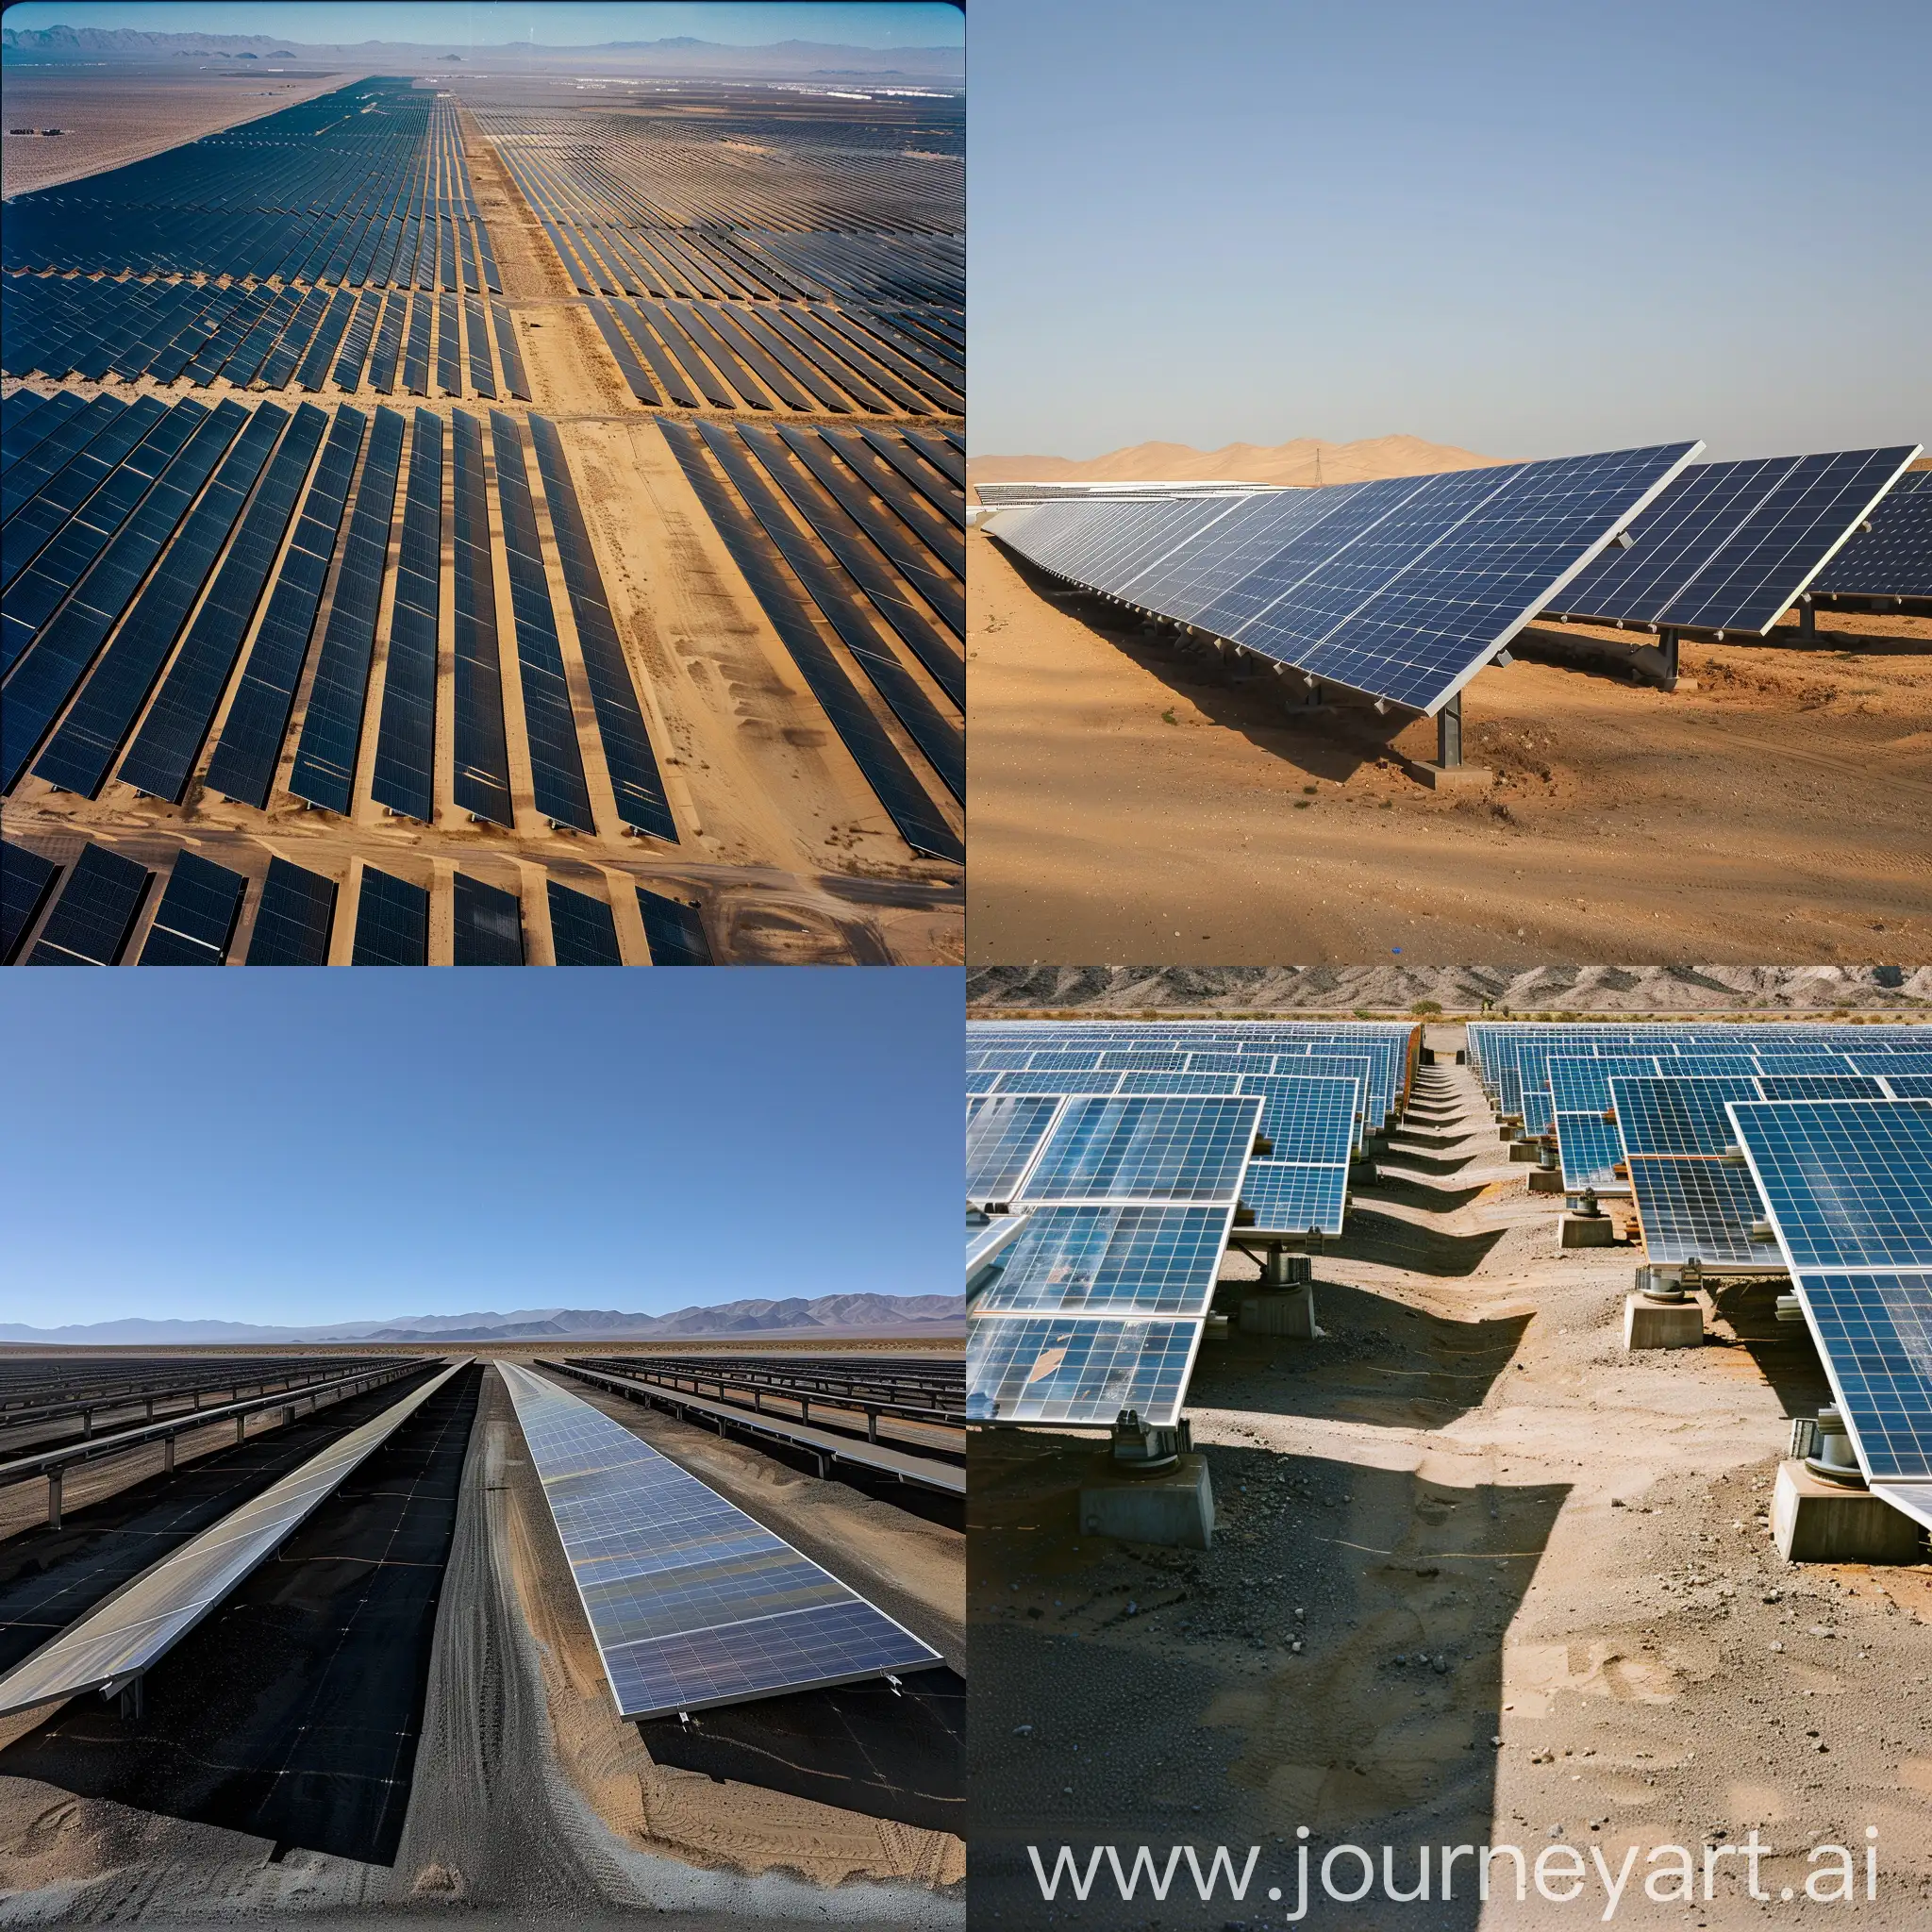 CloseUp-View-of-Solar-Panels-in-Desert-Landscape